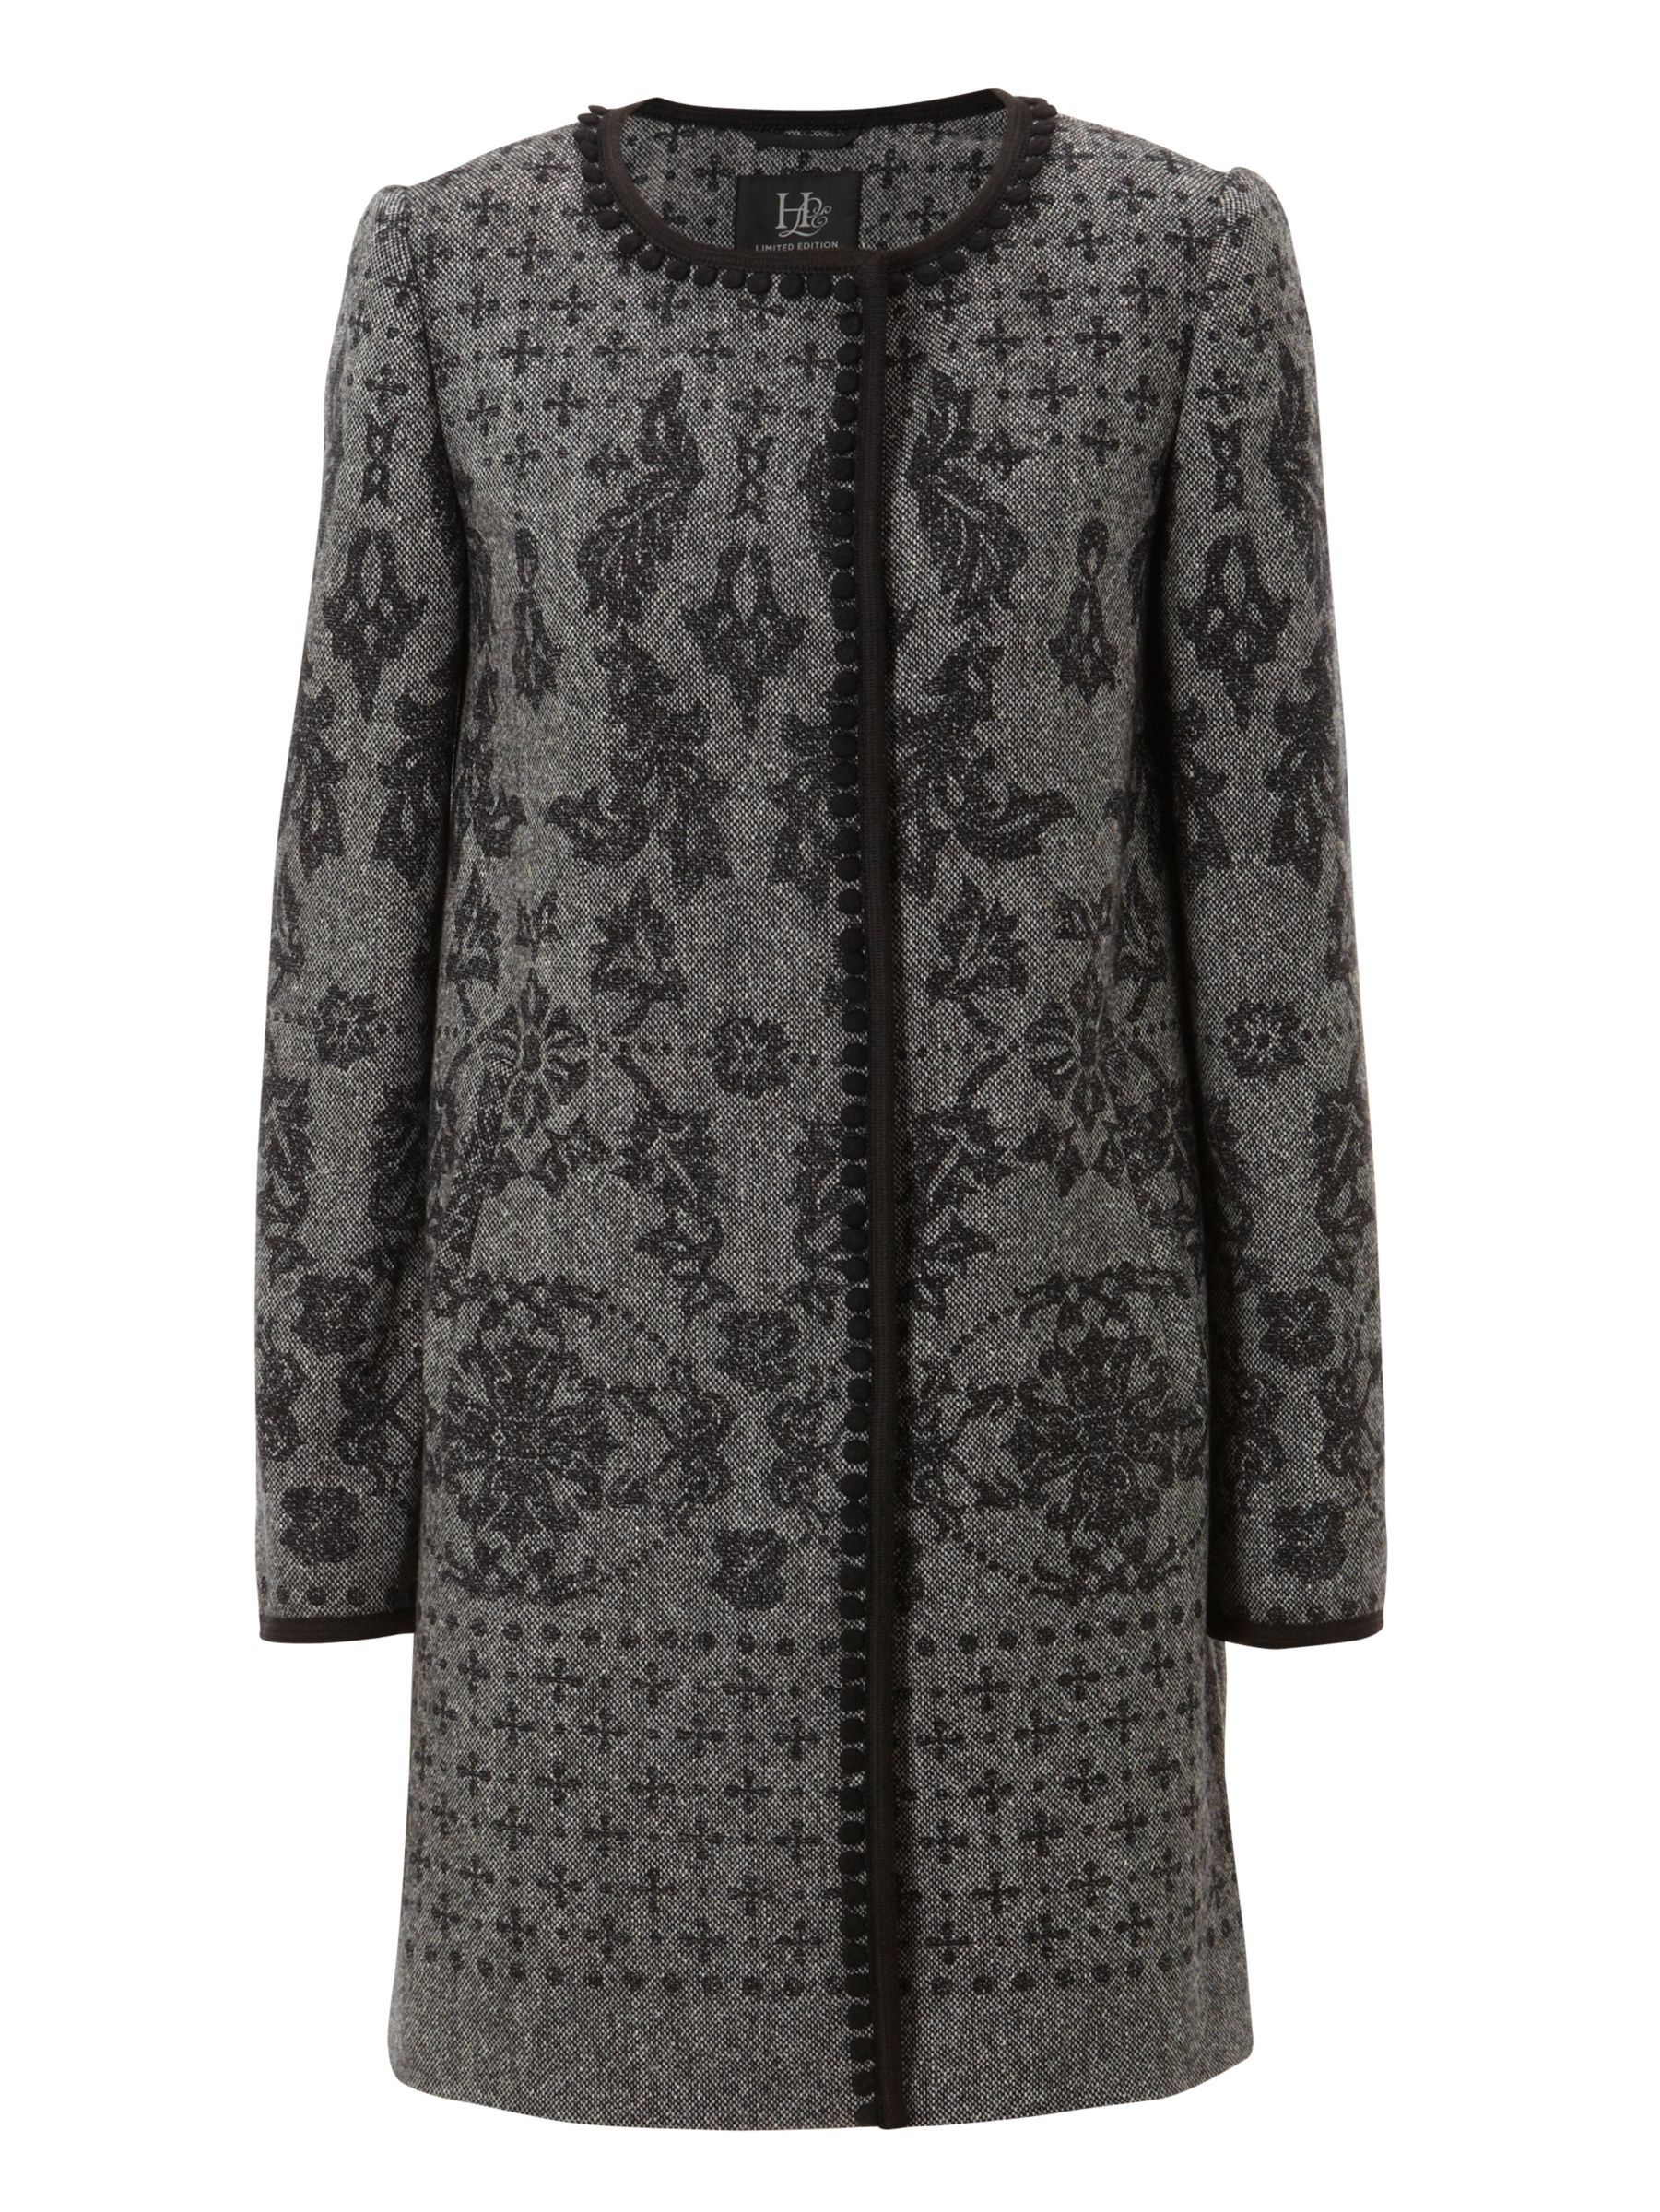 Hobbs Limited Edition Tapestry Coat, Grey/black at John Lewis